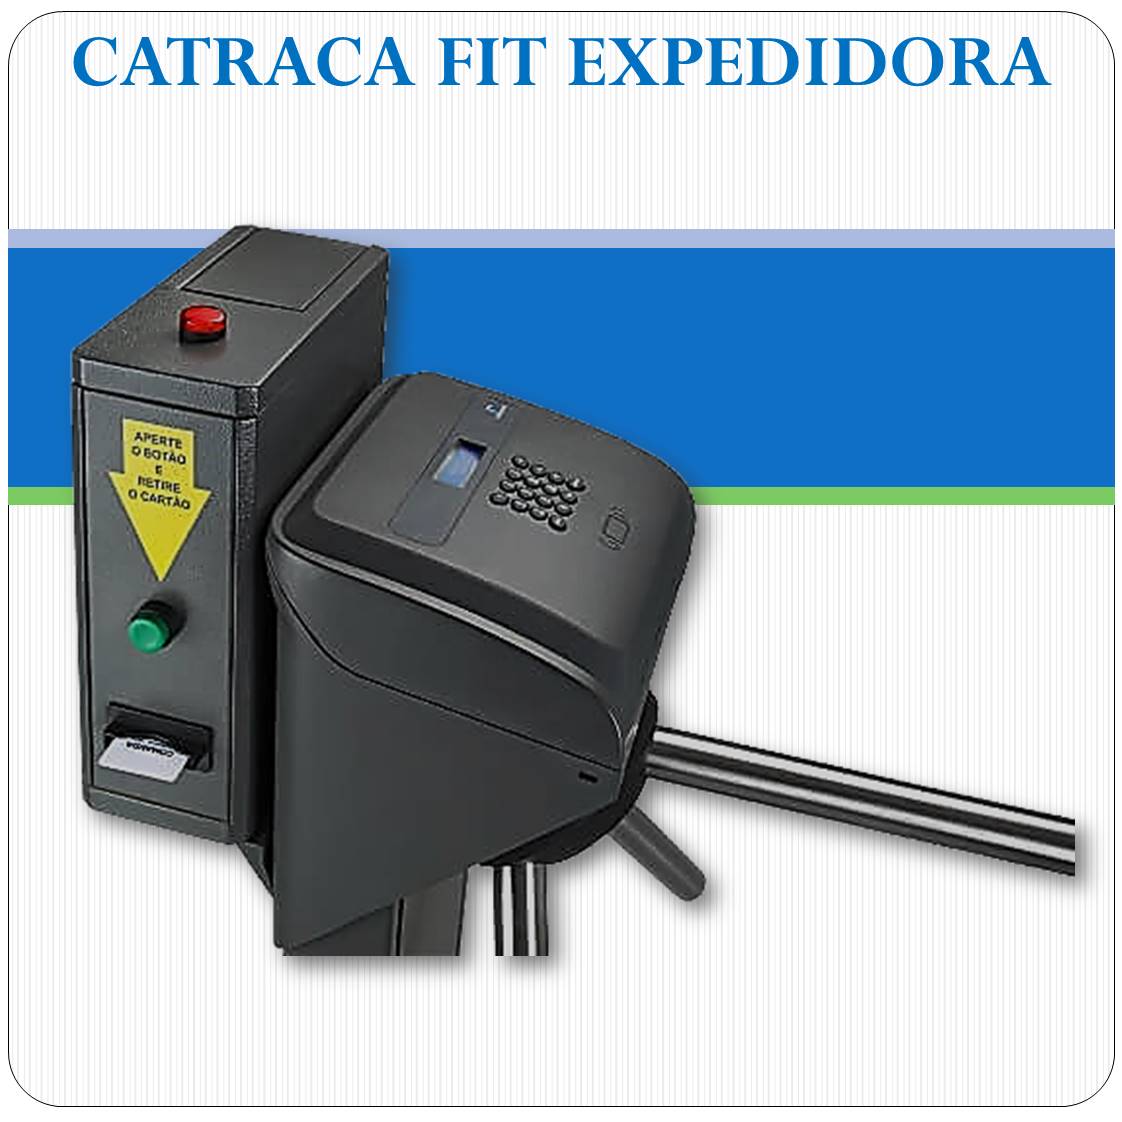 Catraca Expedidora de Comanda - Fit Expedidora